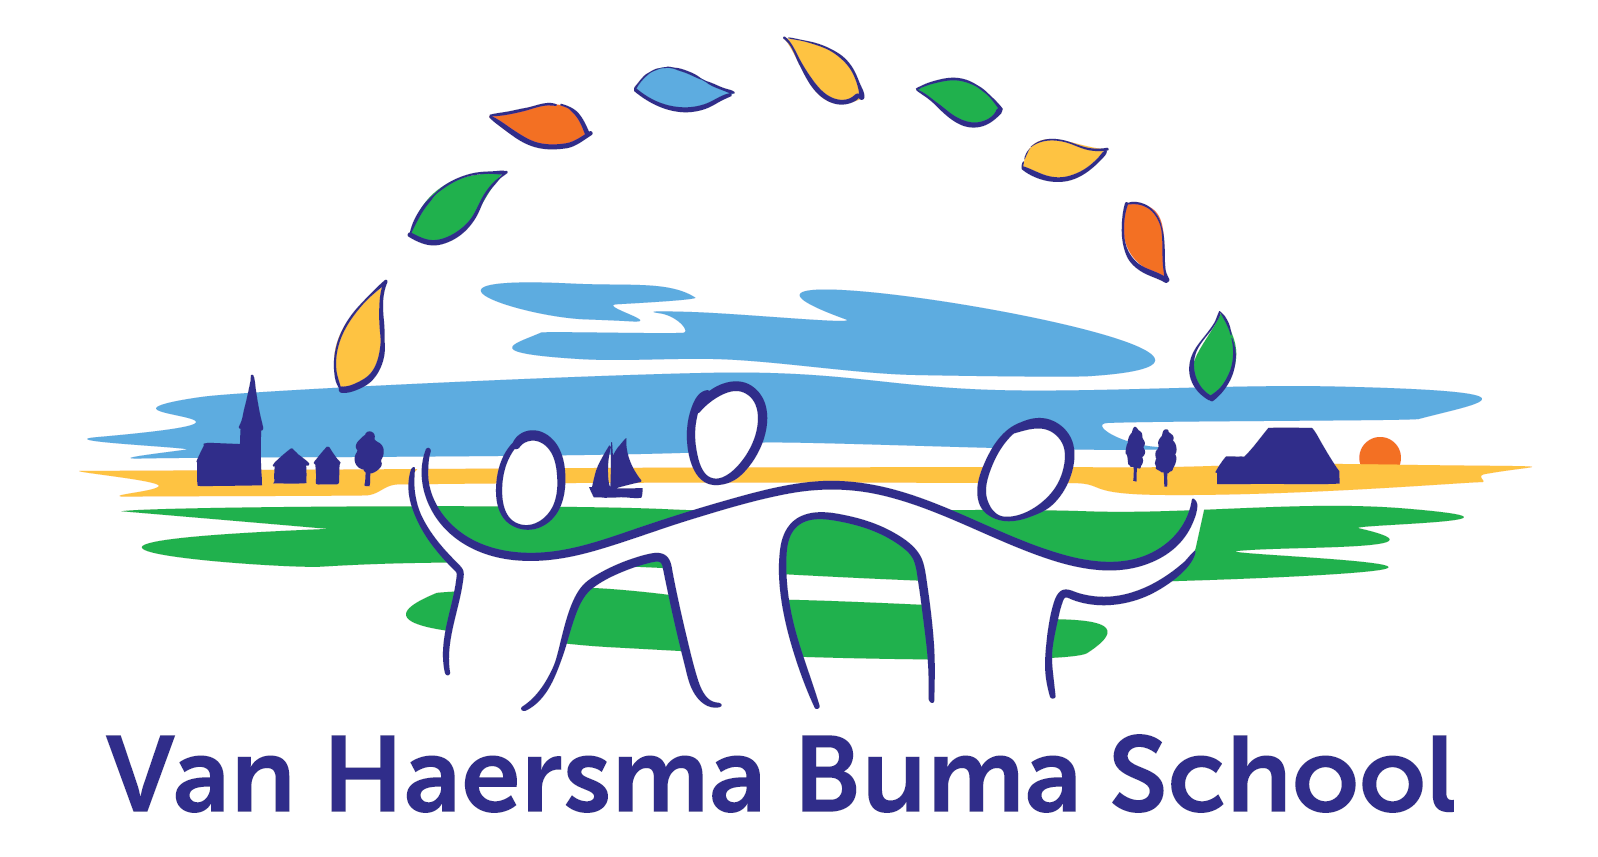 Van Haersma Buma School logo